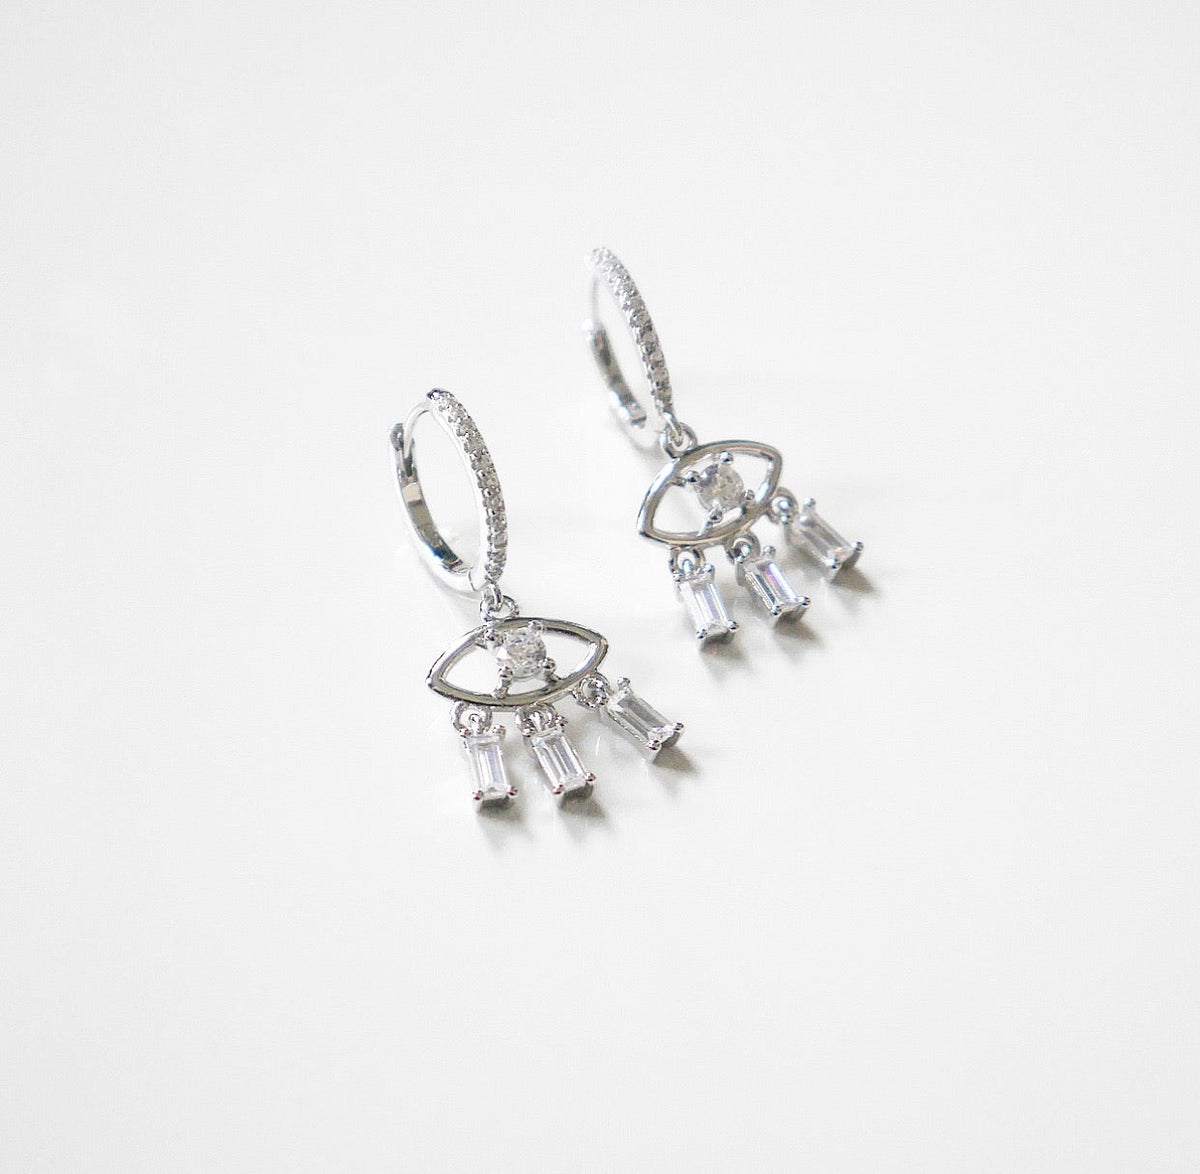 evil eye crystal earrings with eyelashes sterling silver earrings 